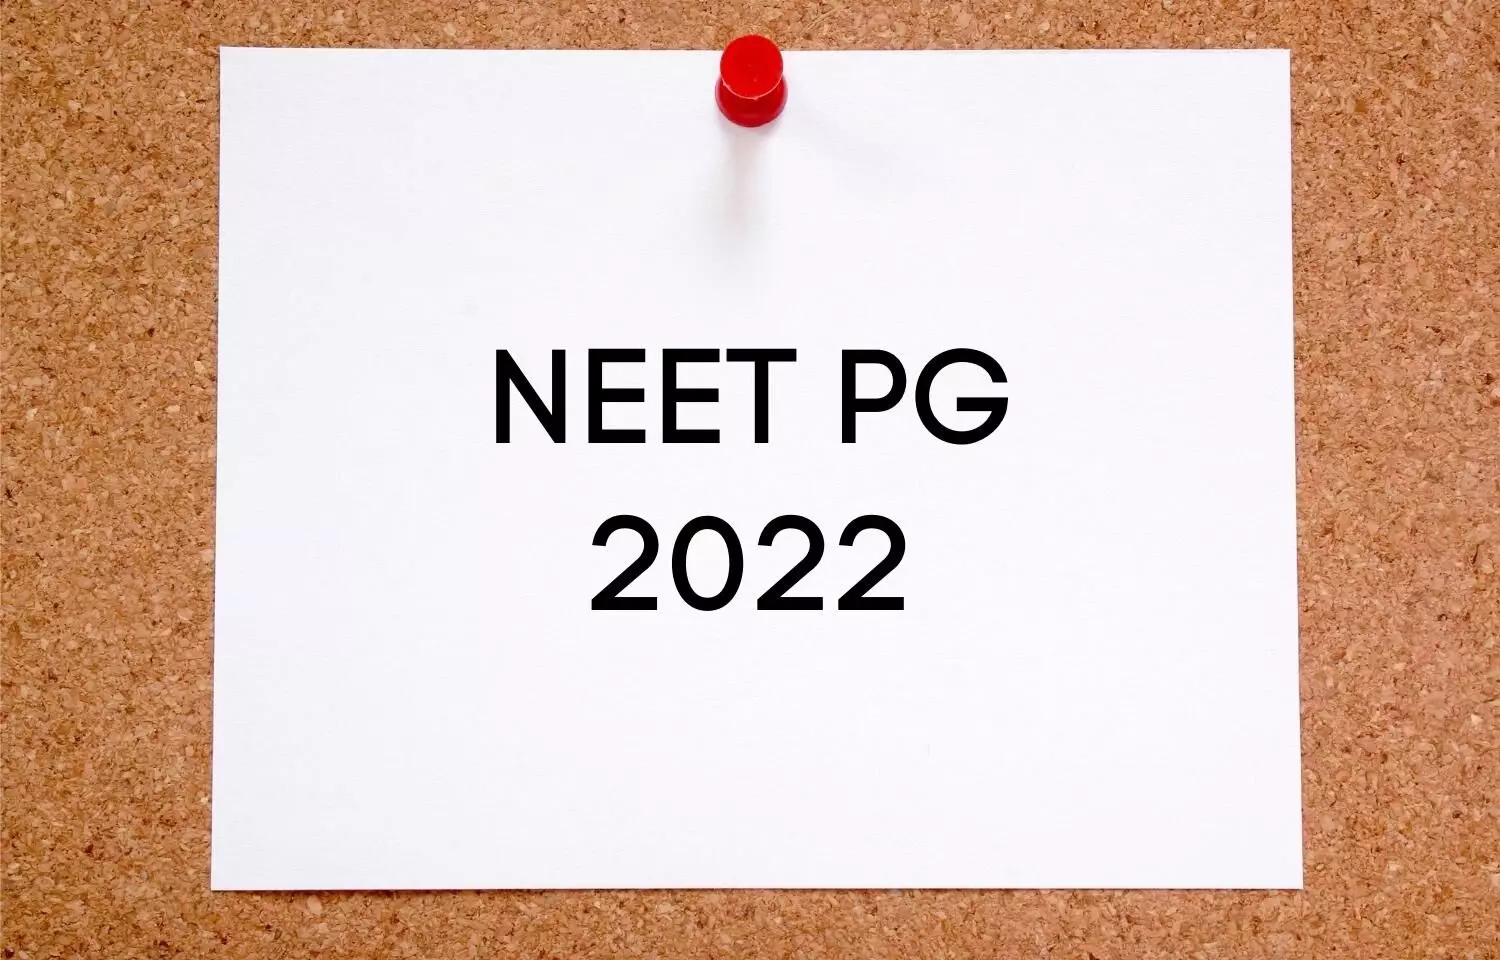 NEET PG 2022 Candidates move Supreme Court seeking clarity on EWS Criteria